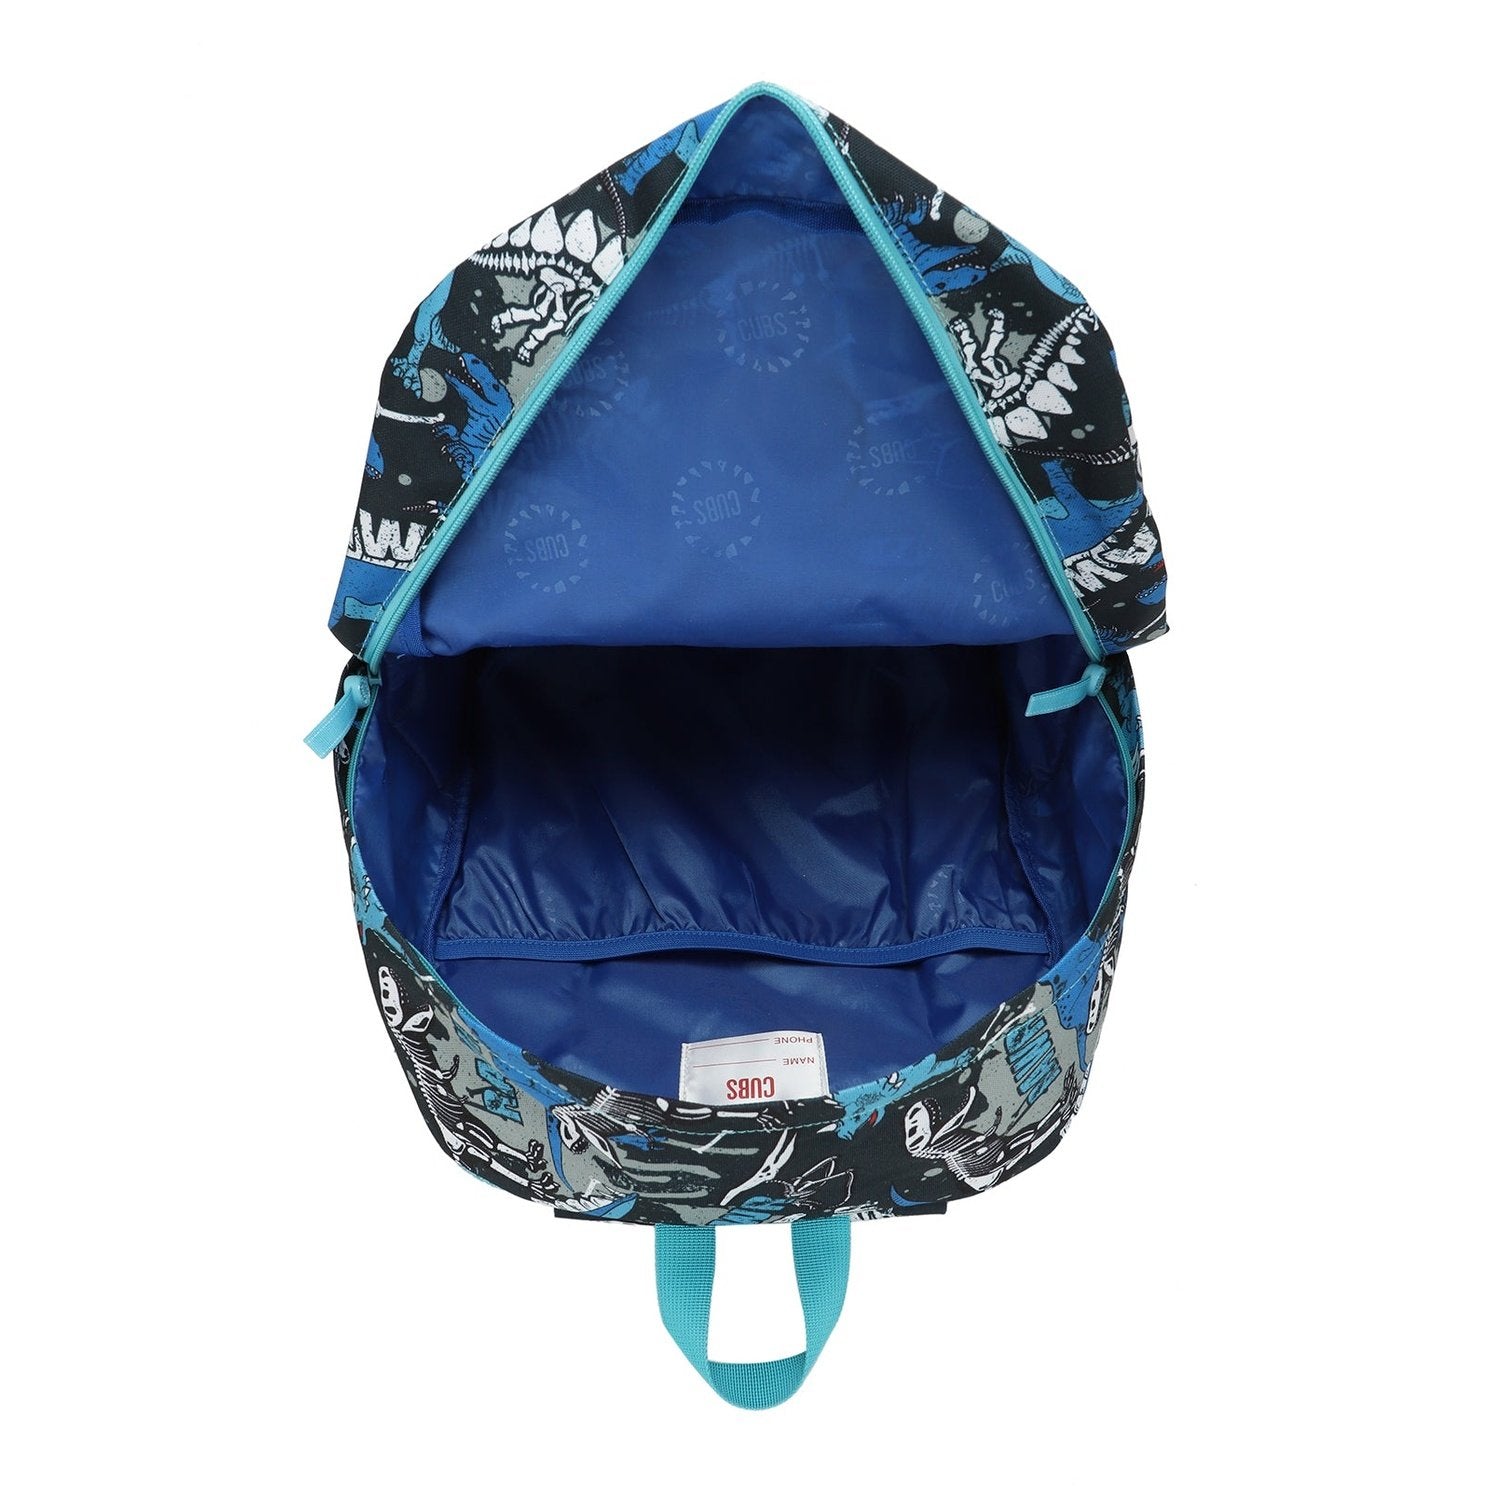 Black and Blue Roar Backpack